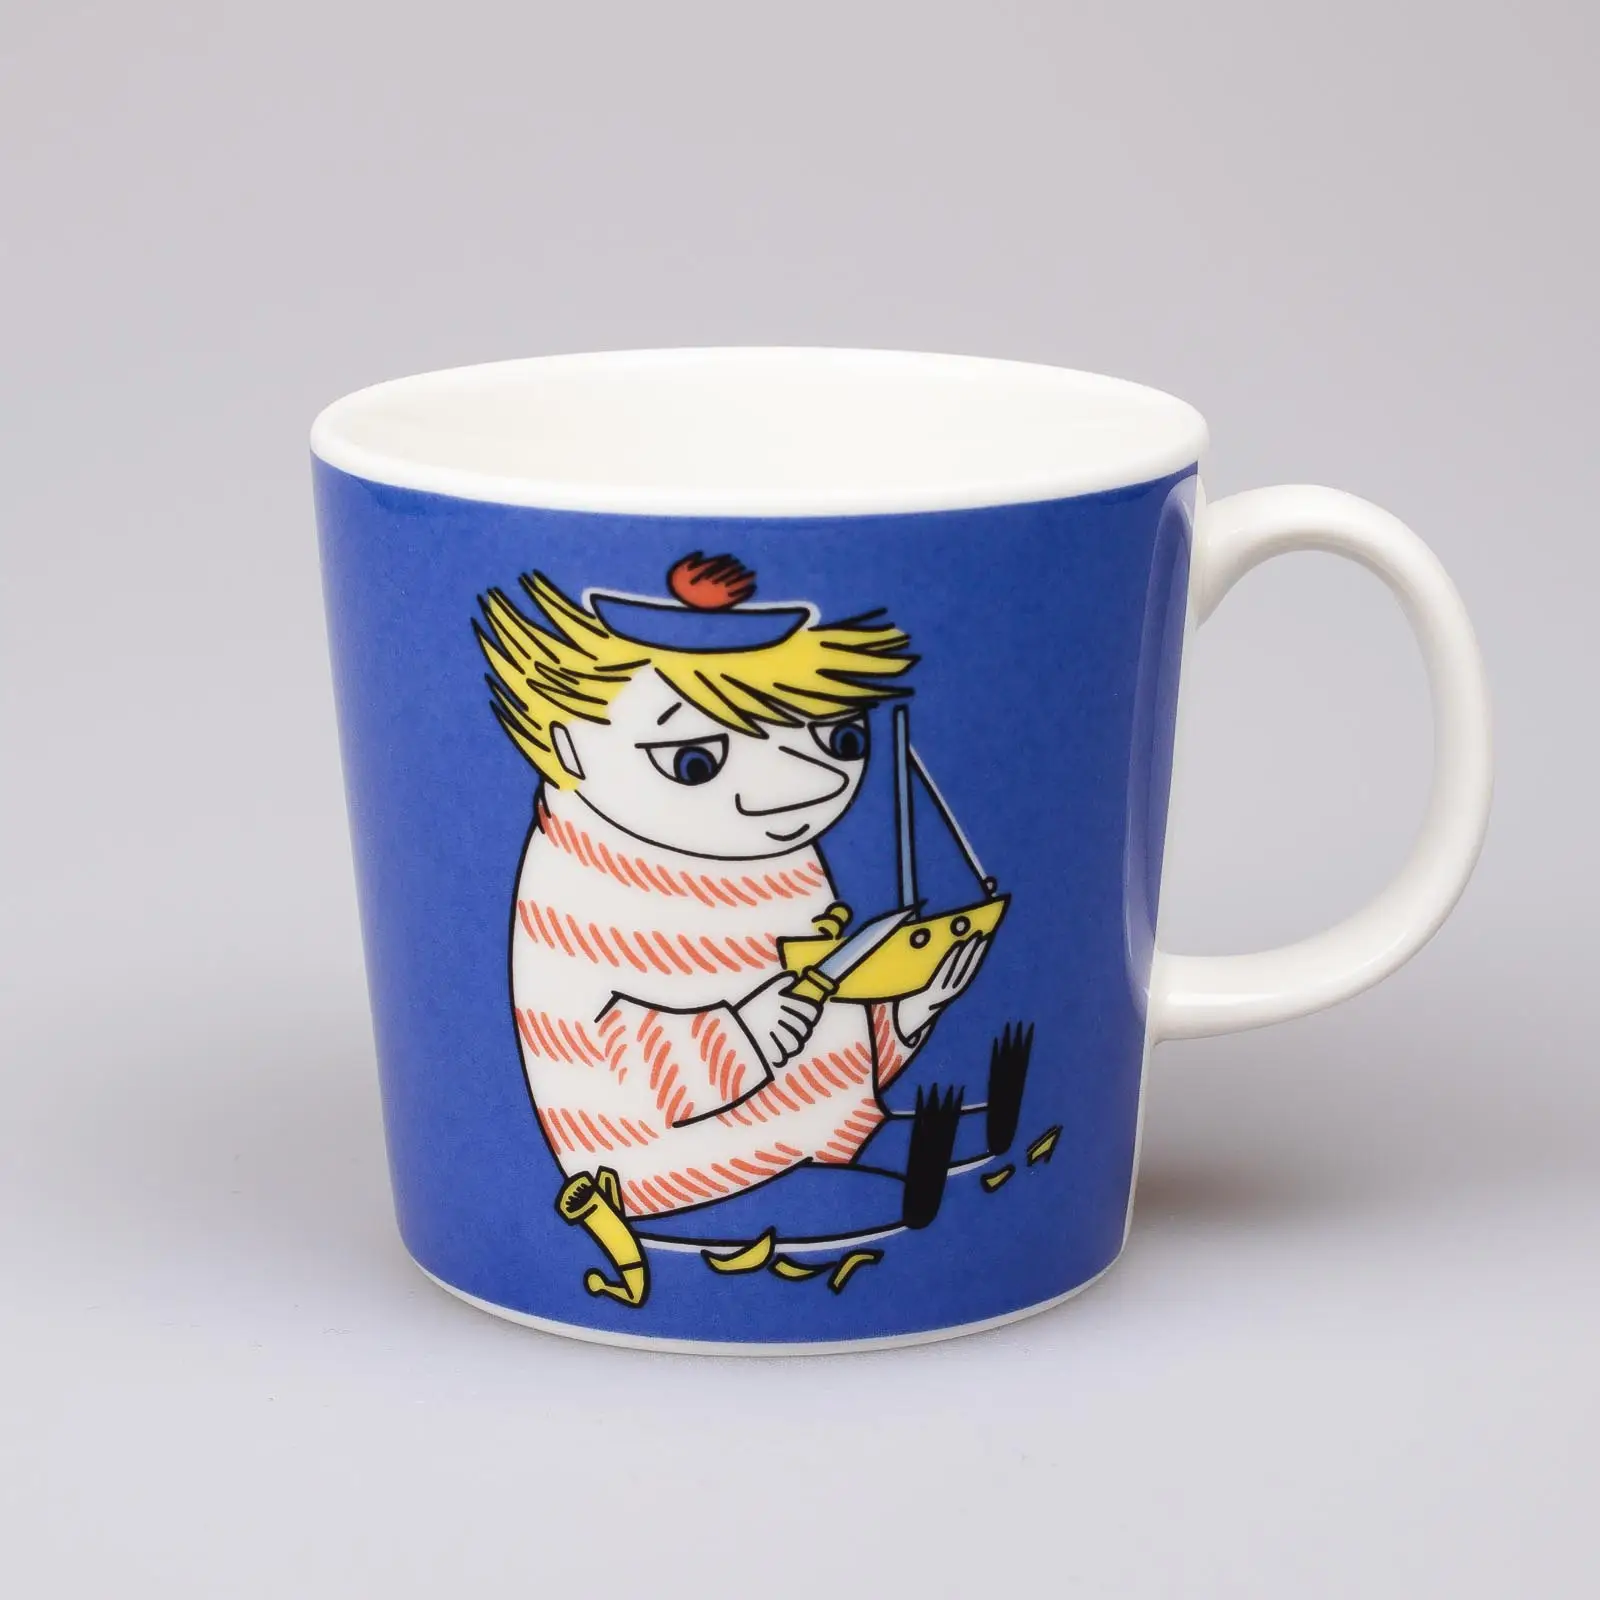 Moomin mug – Too-Ticky – (2006 – 2015)